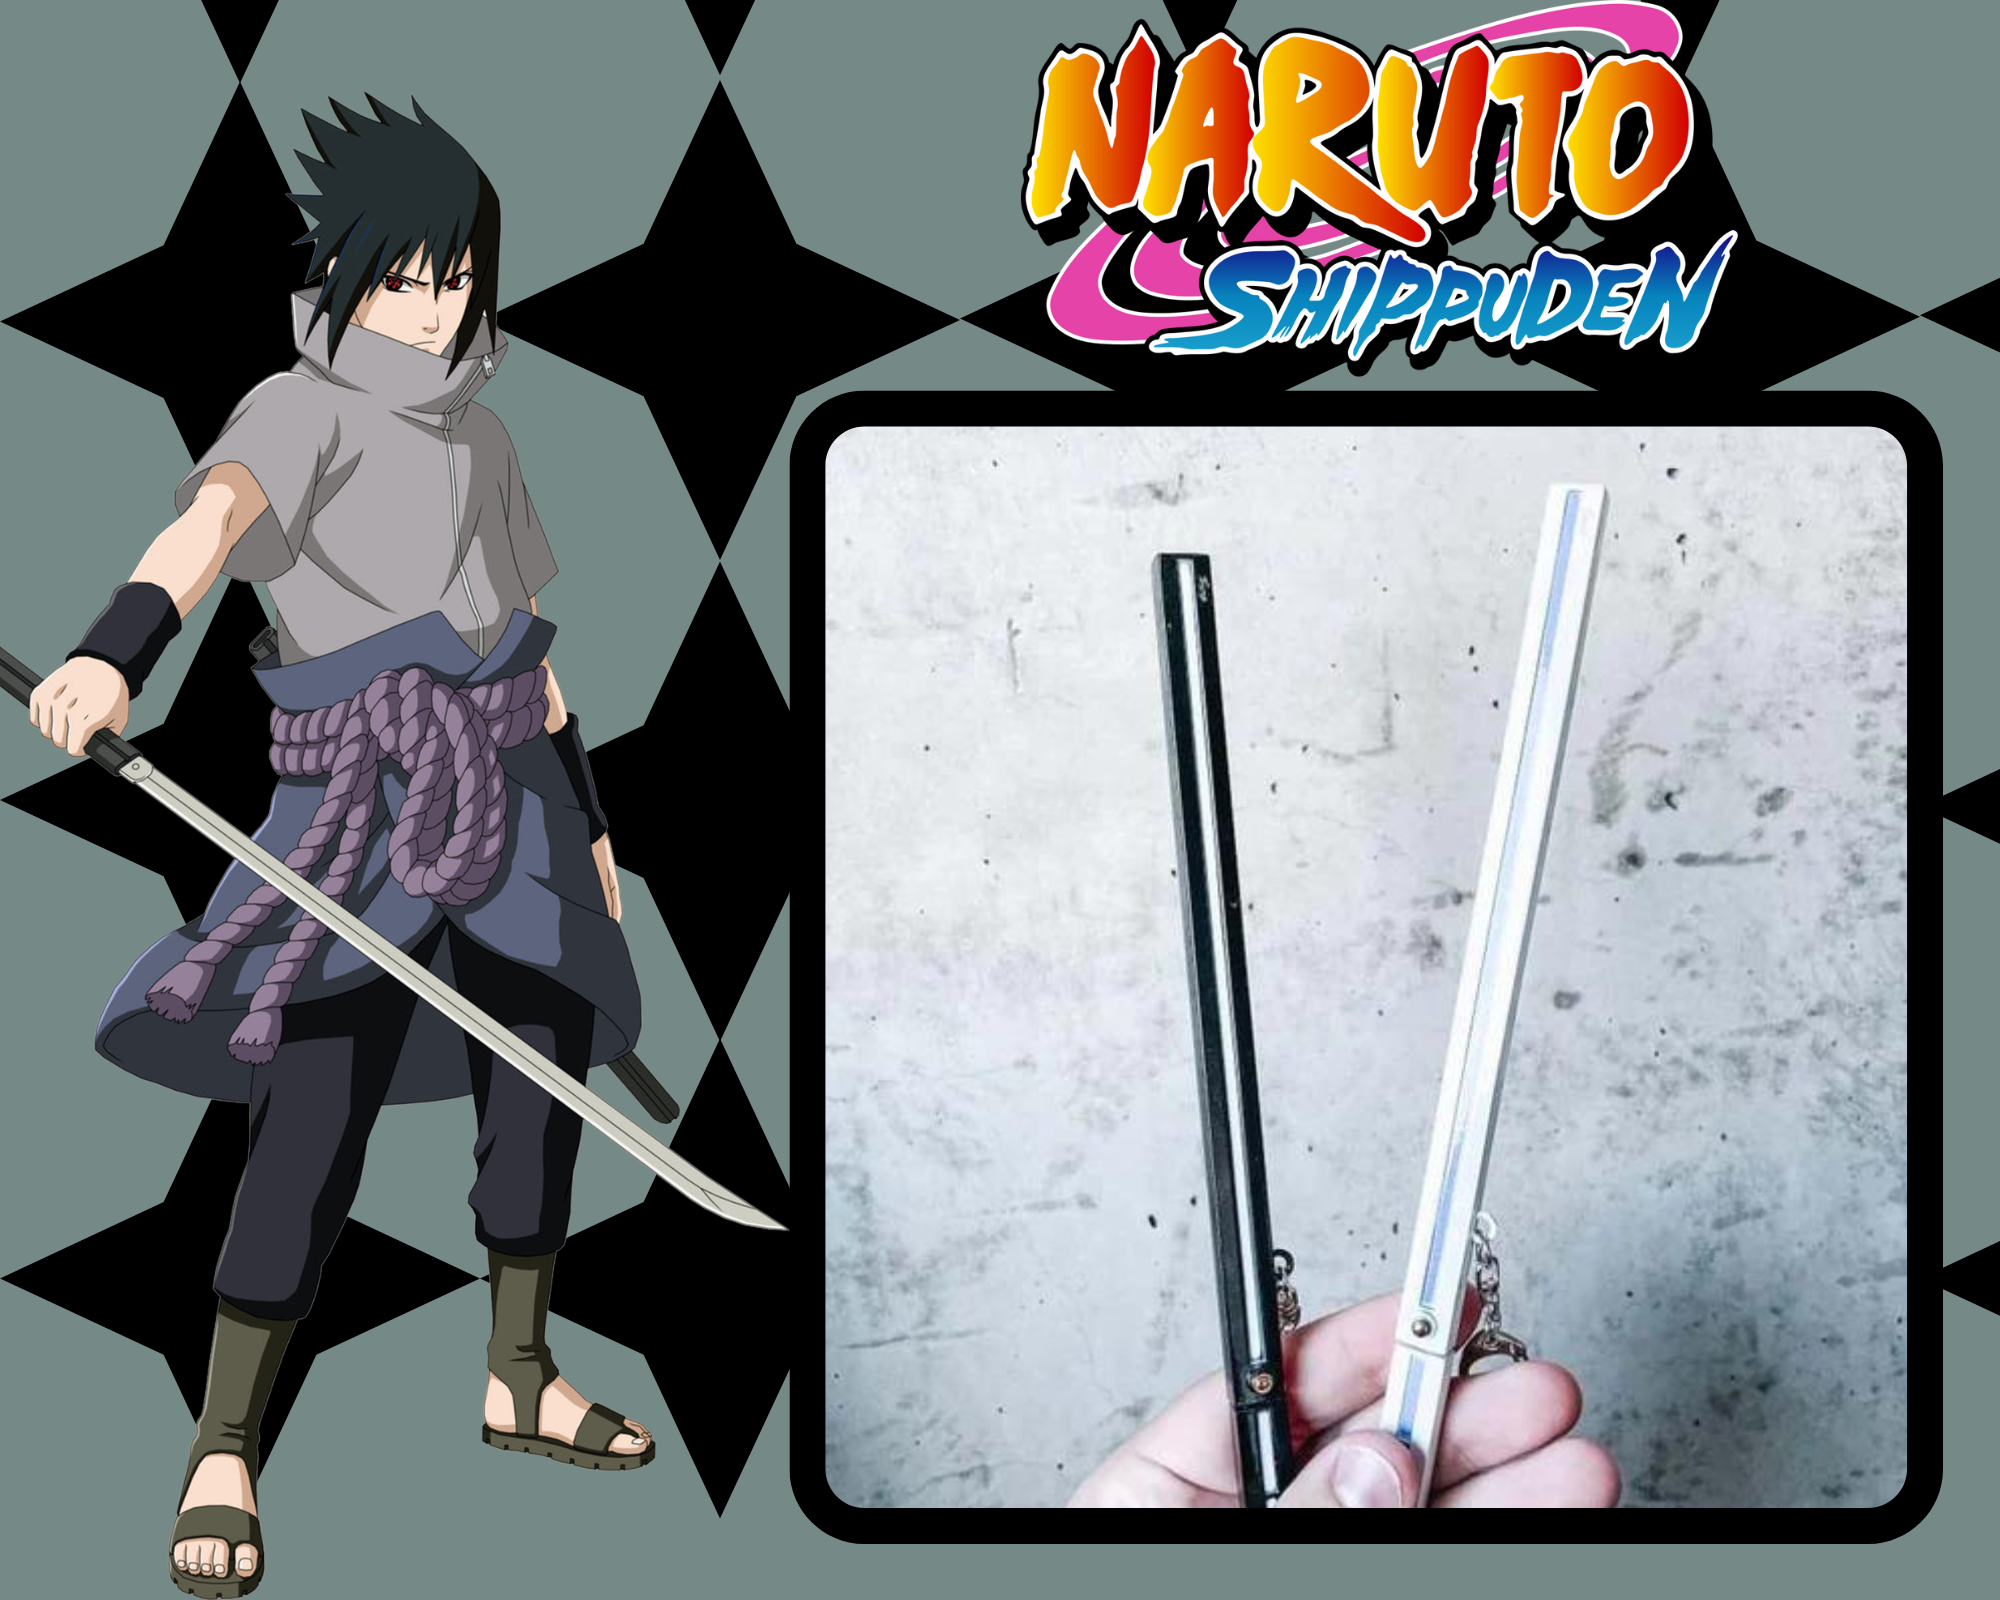 Sasuke Katana  Japanese Swords Inspired by Naruto